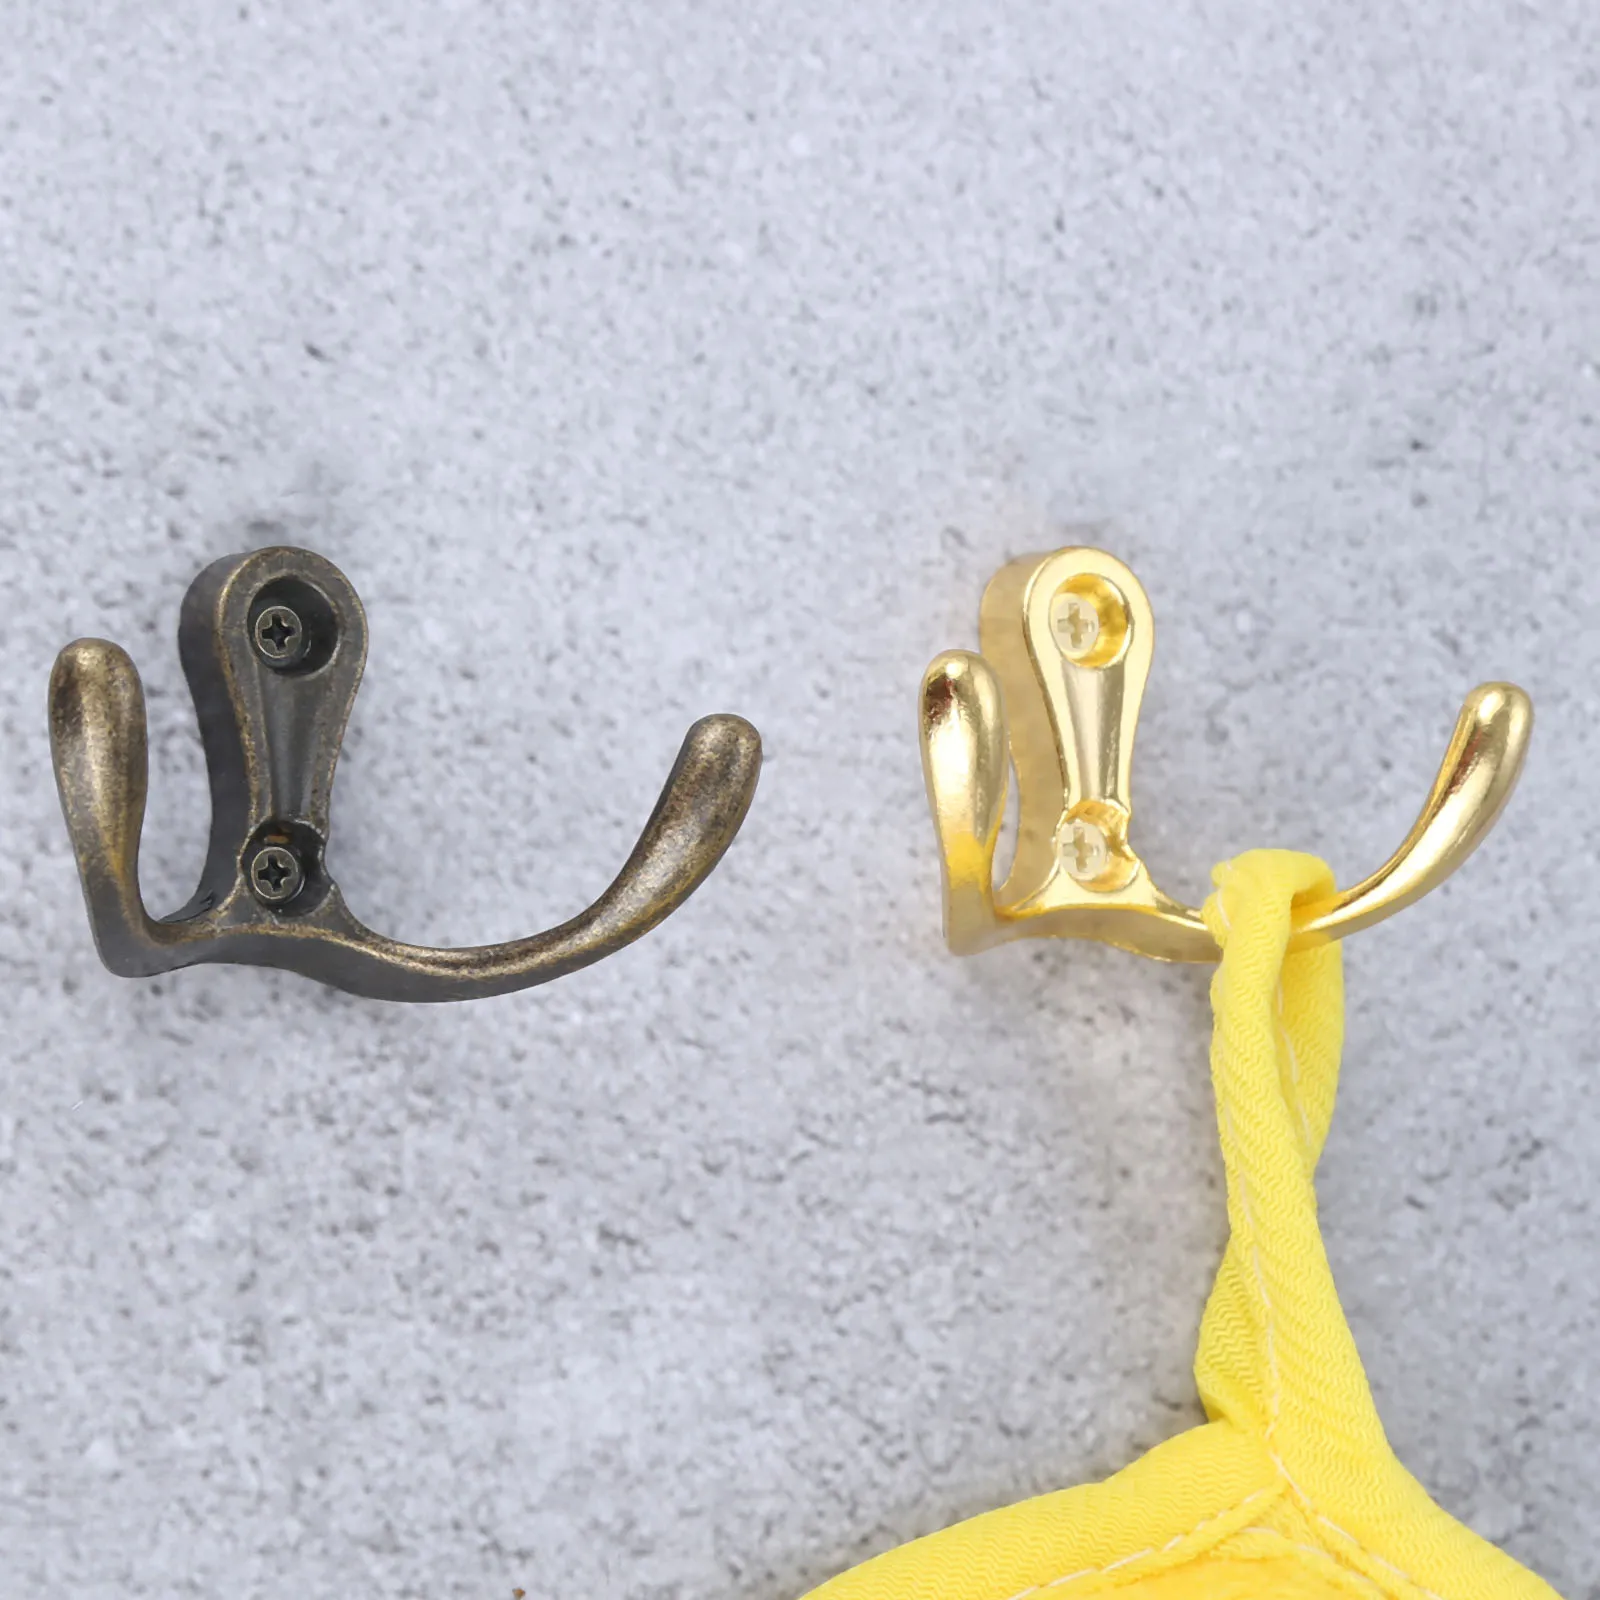 2sets Double Head Hooks Wall Mounted Hanger w/screws Antique bronze/Gold Coat/Key/Bag/Towel/Hat Holder Bathroom Kitchen 53x30mm